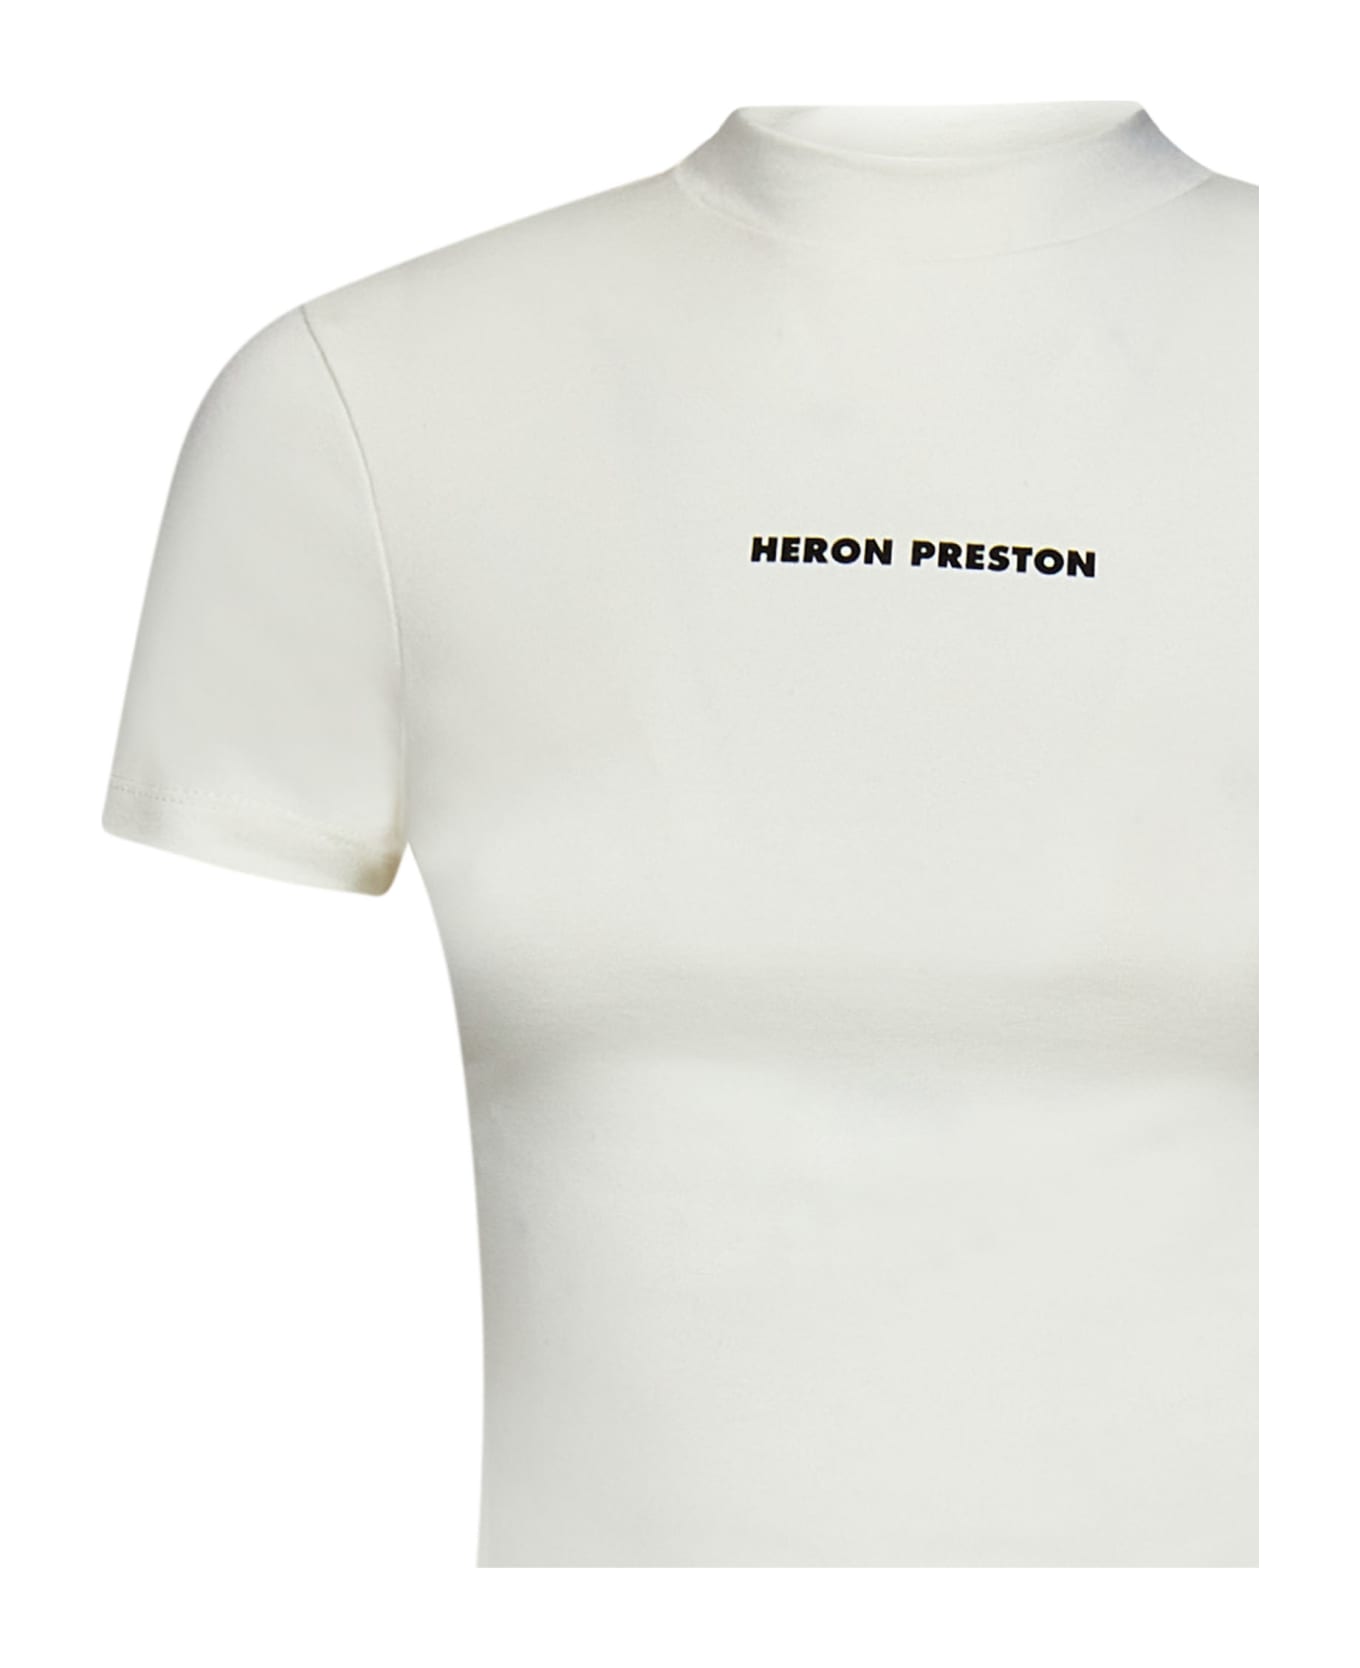 HERON PRESTON T-shirt - White